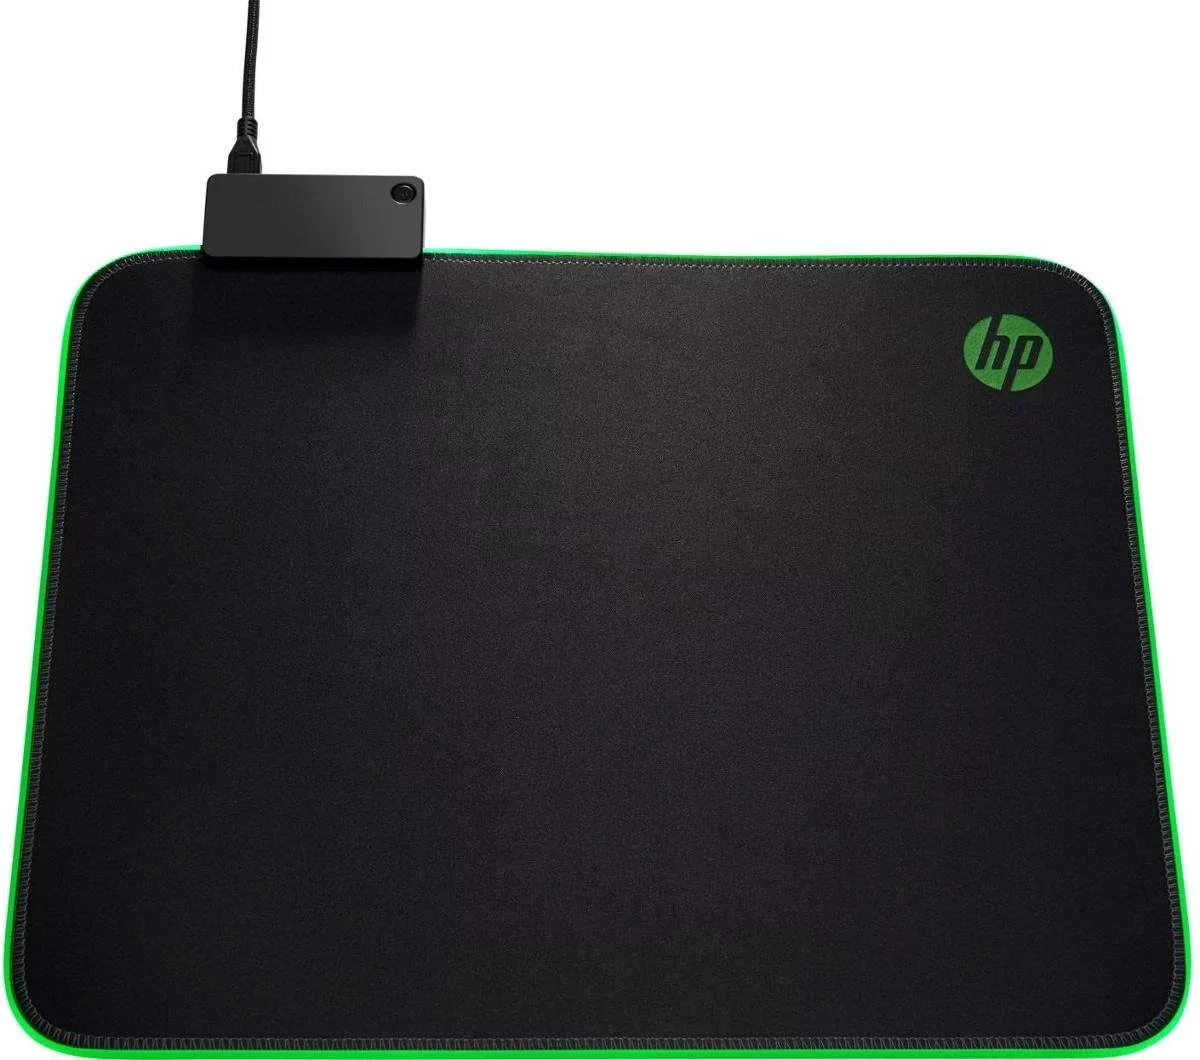 HP Pavilion Gaming Mouse Pad 400 black